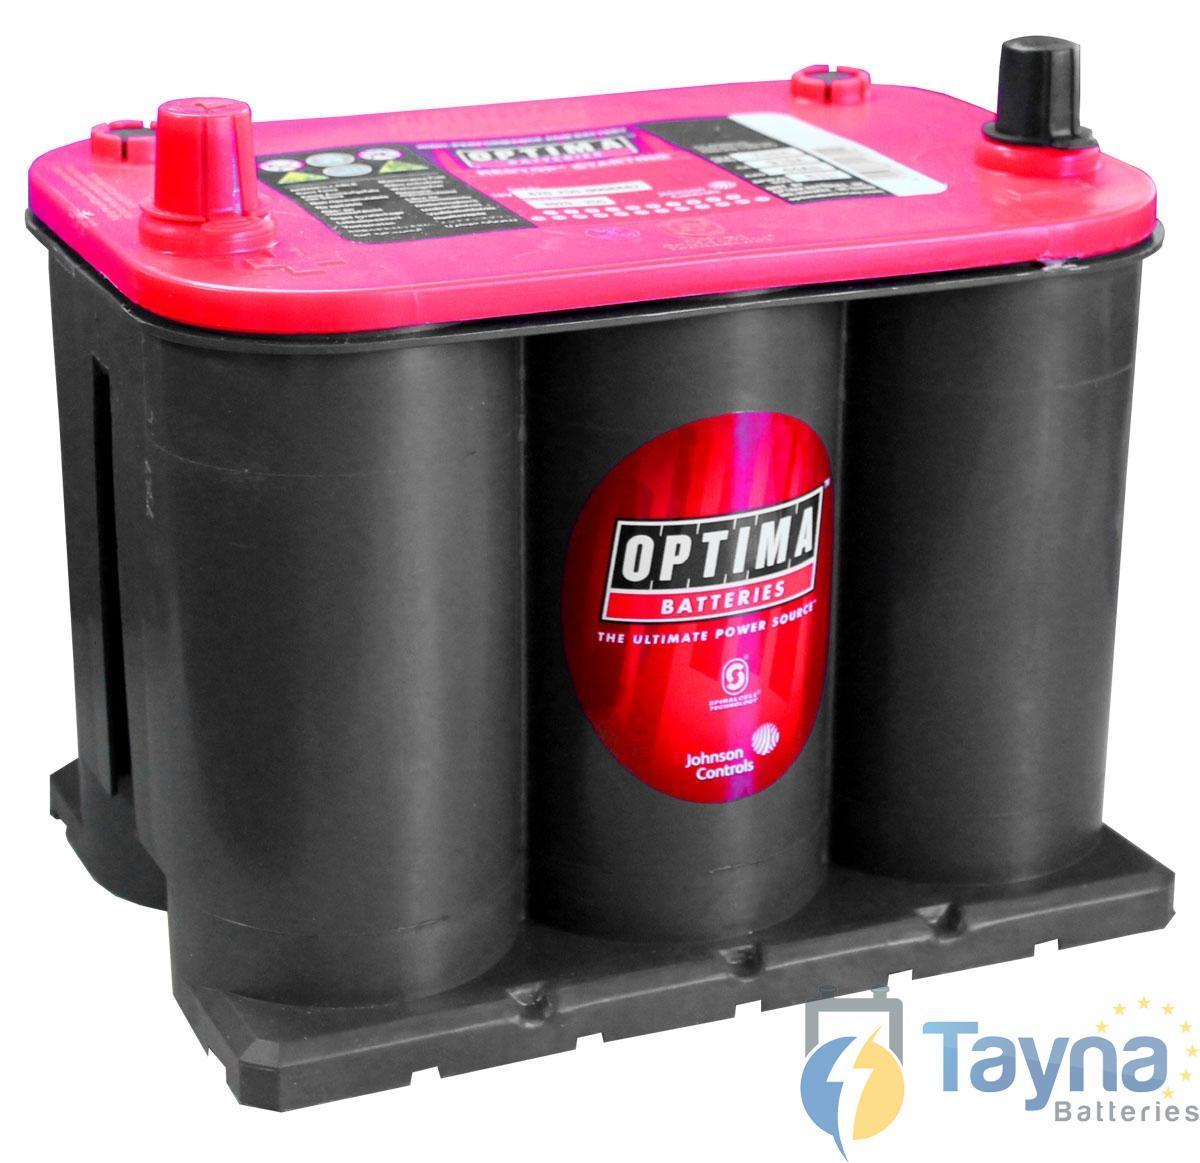 Batterie Optima Rts 3.7 44/730